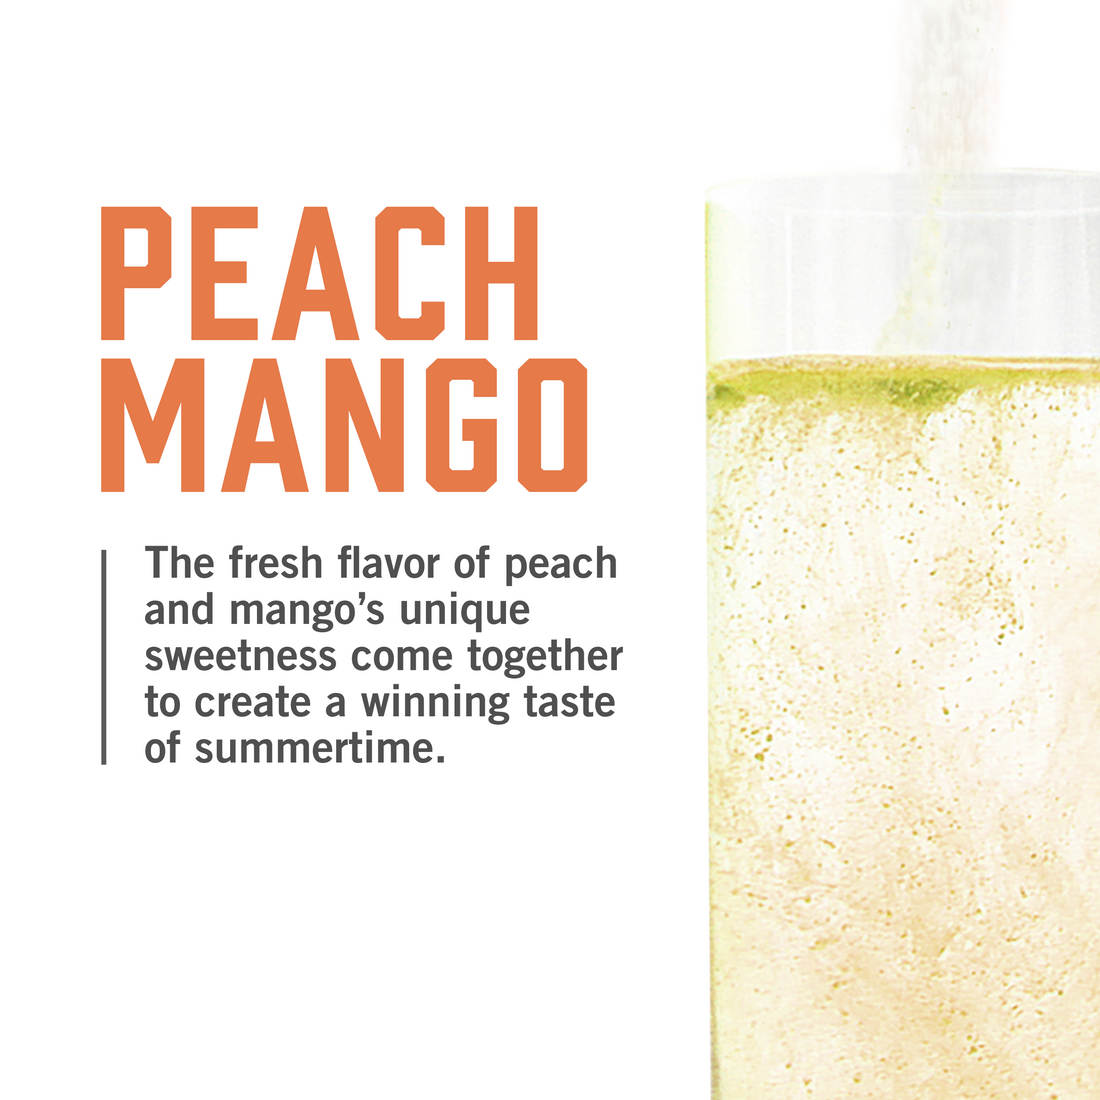 HYDRATION MIX / Peach Mango - 45 Servings